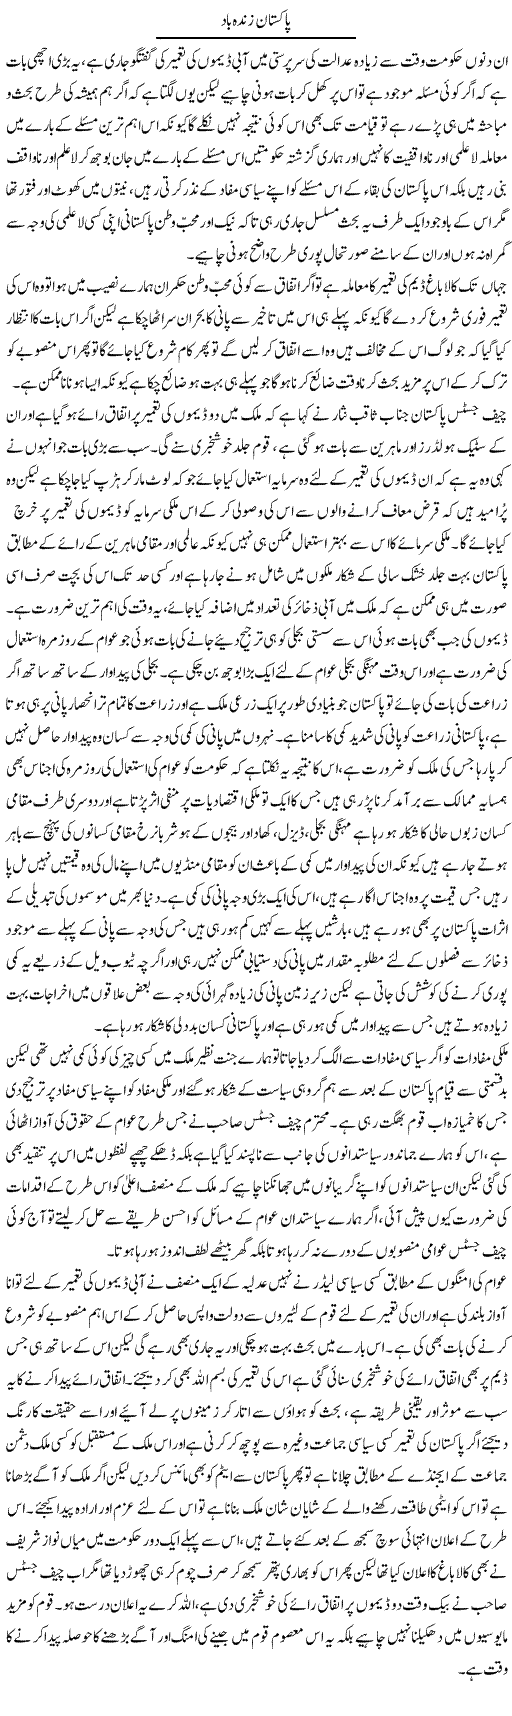 Pakistan Zindabad (1) | Abdul Qadir Hassan | Daily Urdu Columns